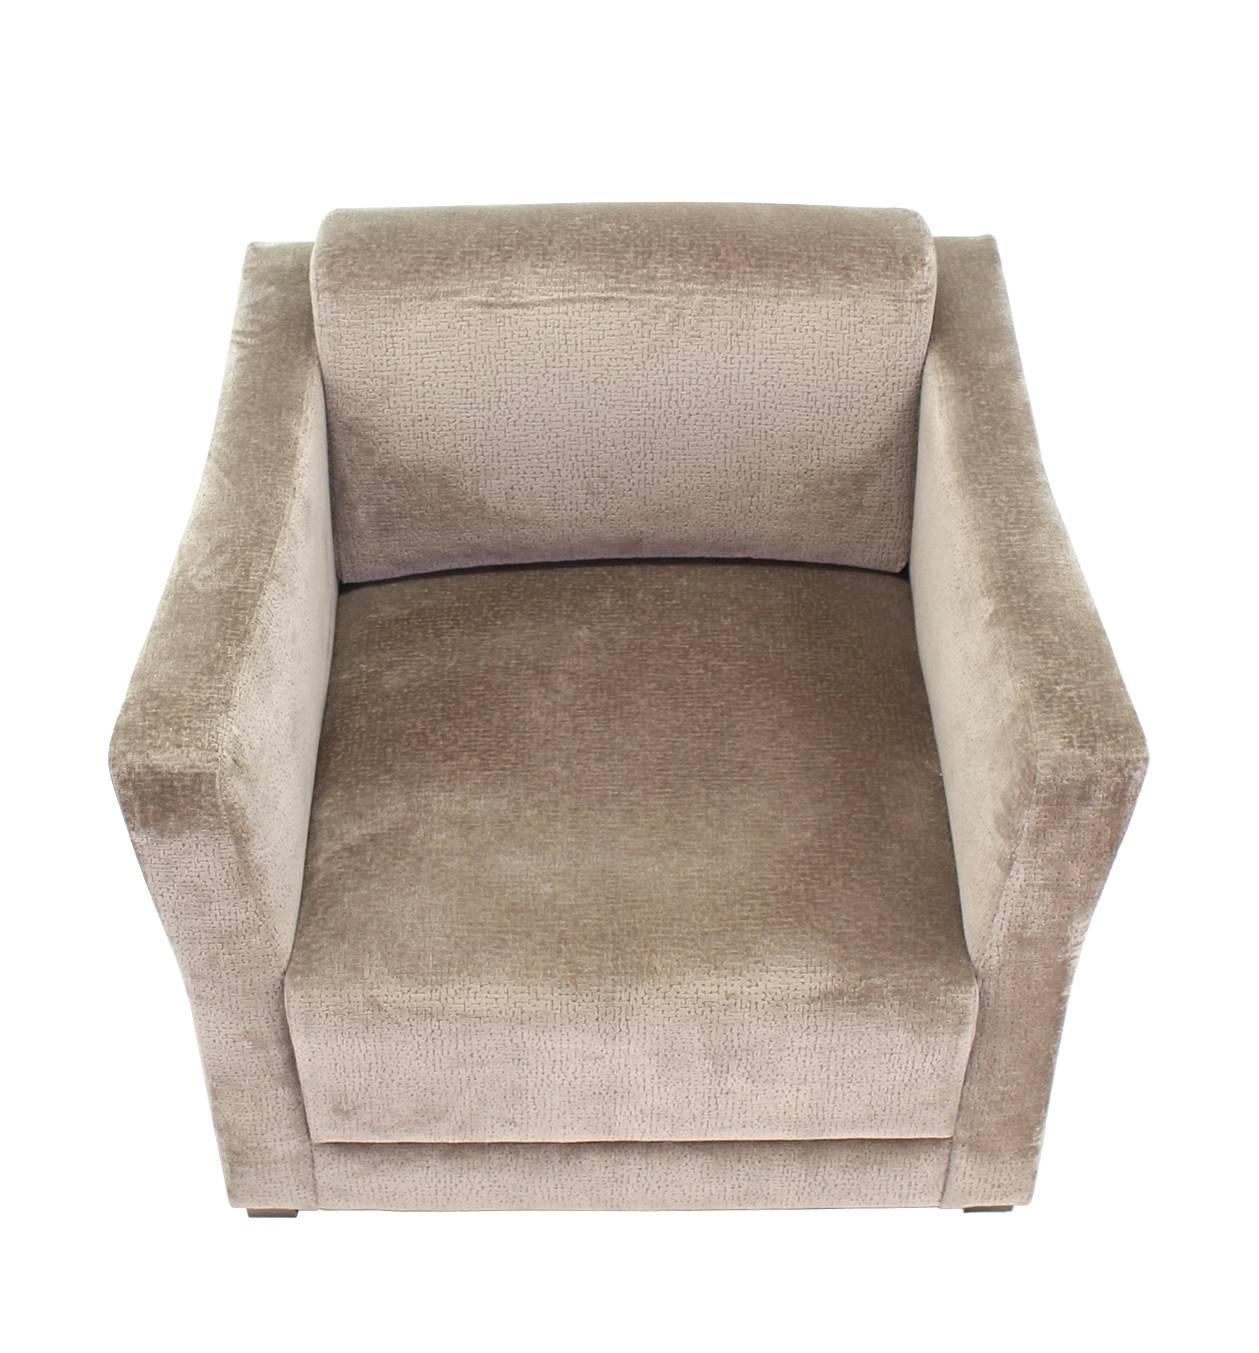 Bernhardt Modern Lounge Chair In Excellent Condition For Sale In Rockaway, NJ